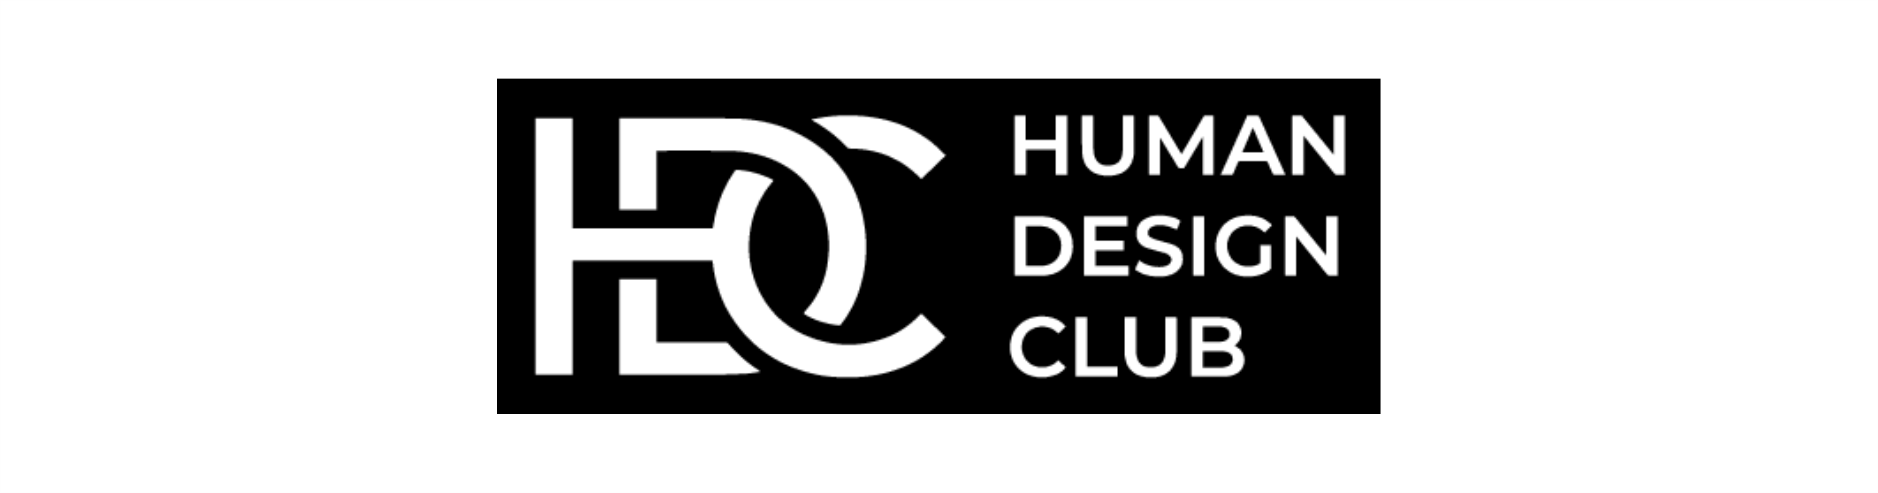 Human design club logo